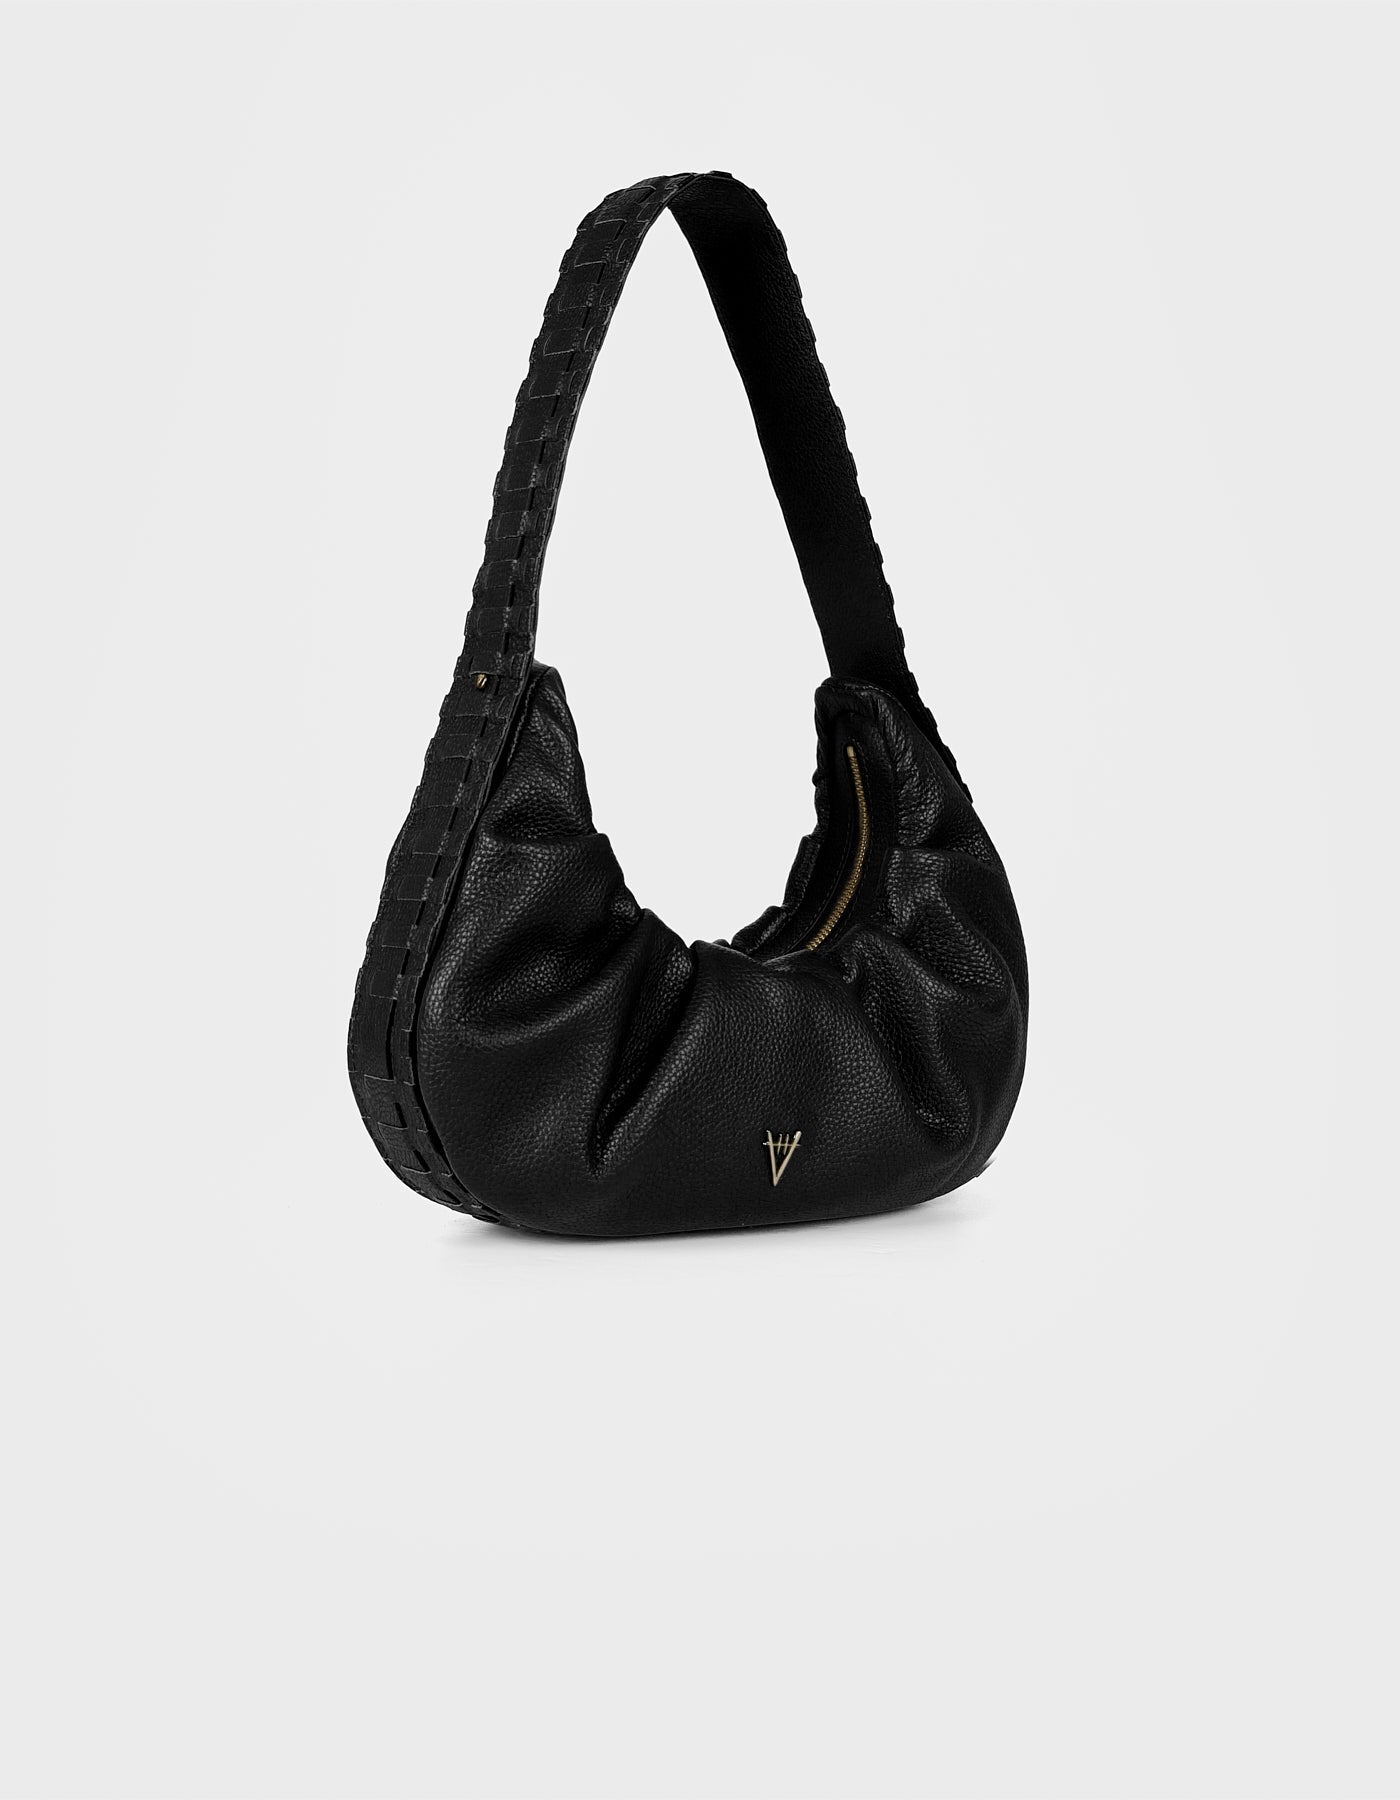 HiVa Atelier | Croissant Bag Black | Beautiful and Versatile